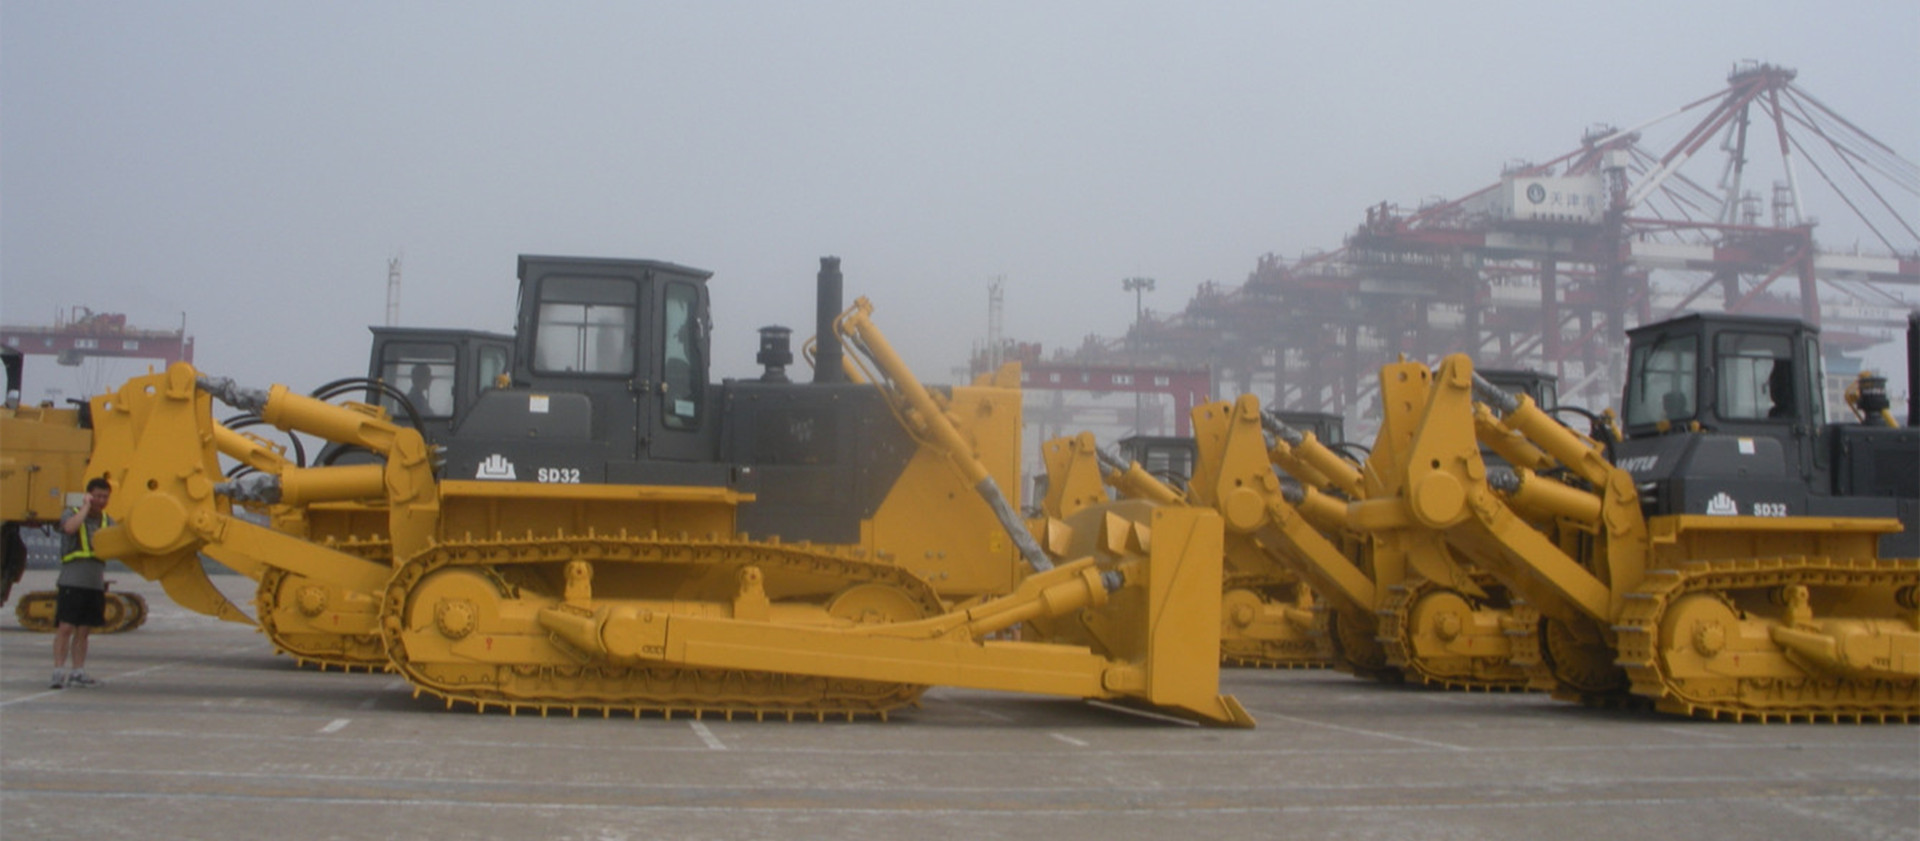 Shantui bulldozer shipping at port